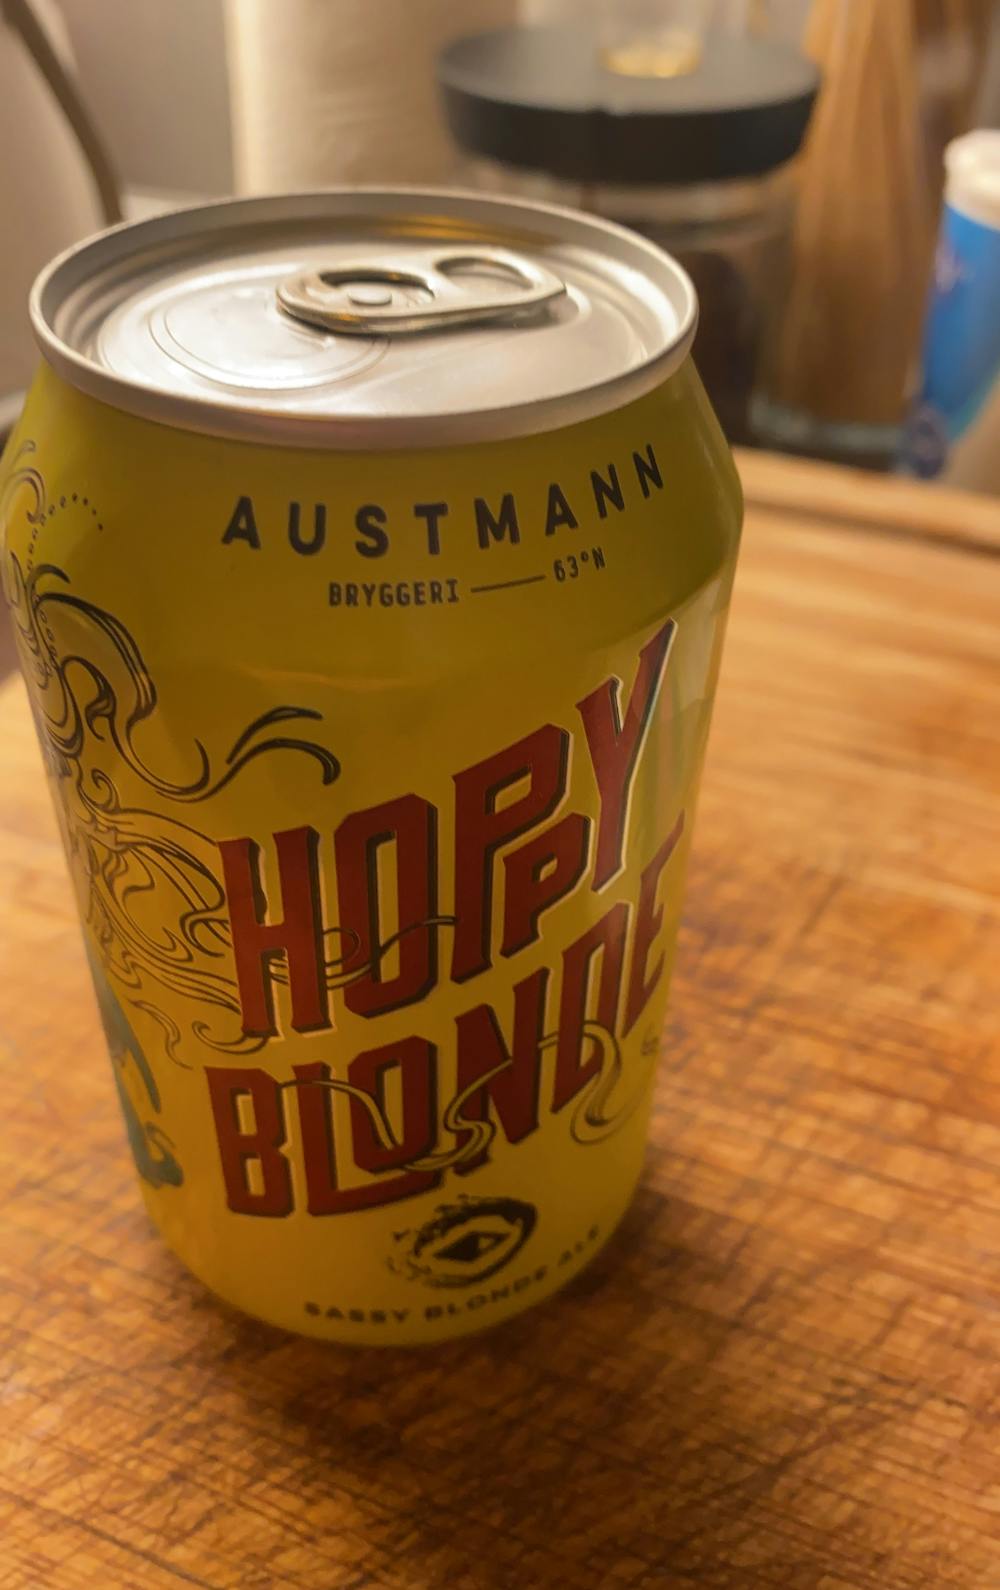 Hoppy blond , Austmann bryggeri 